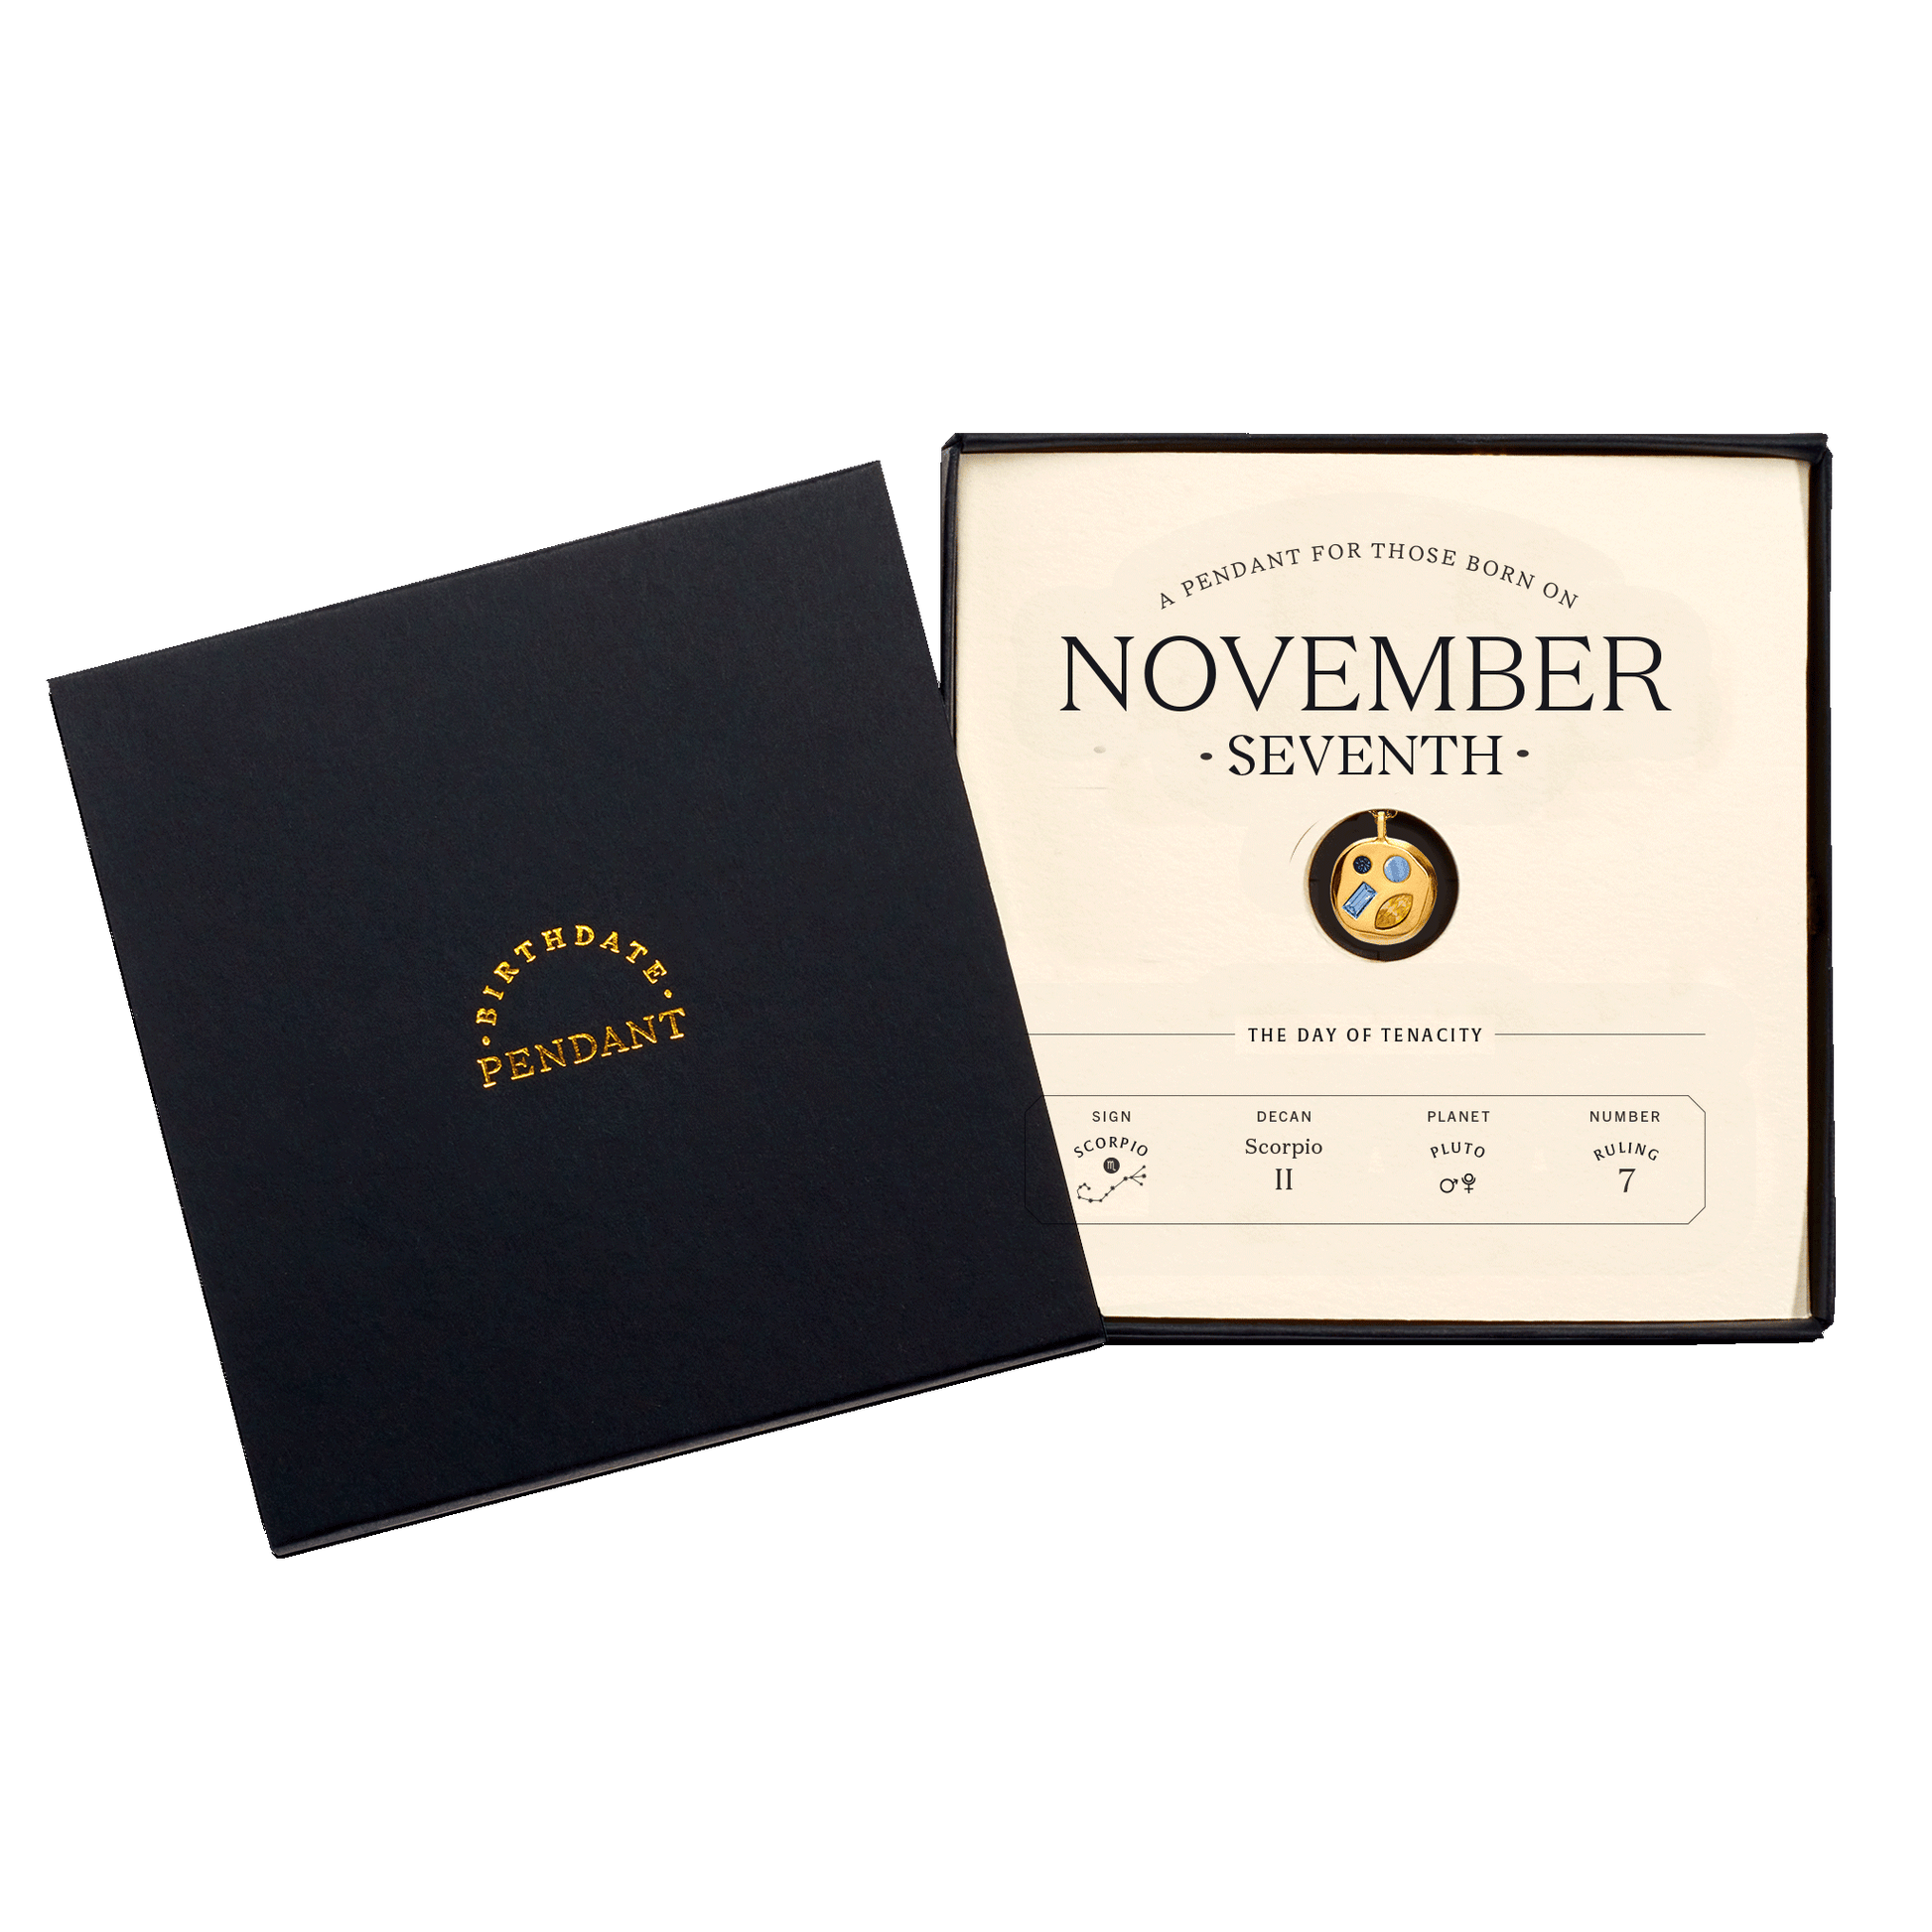 The November Seventh Pendant inside its box